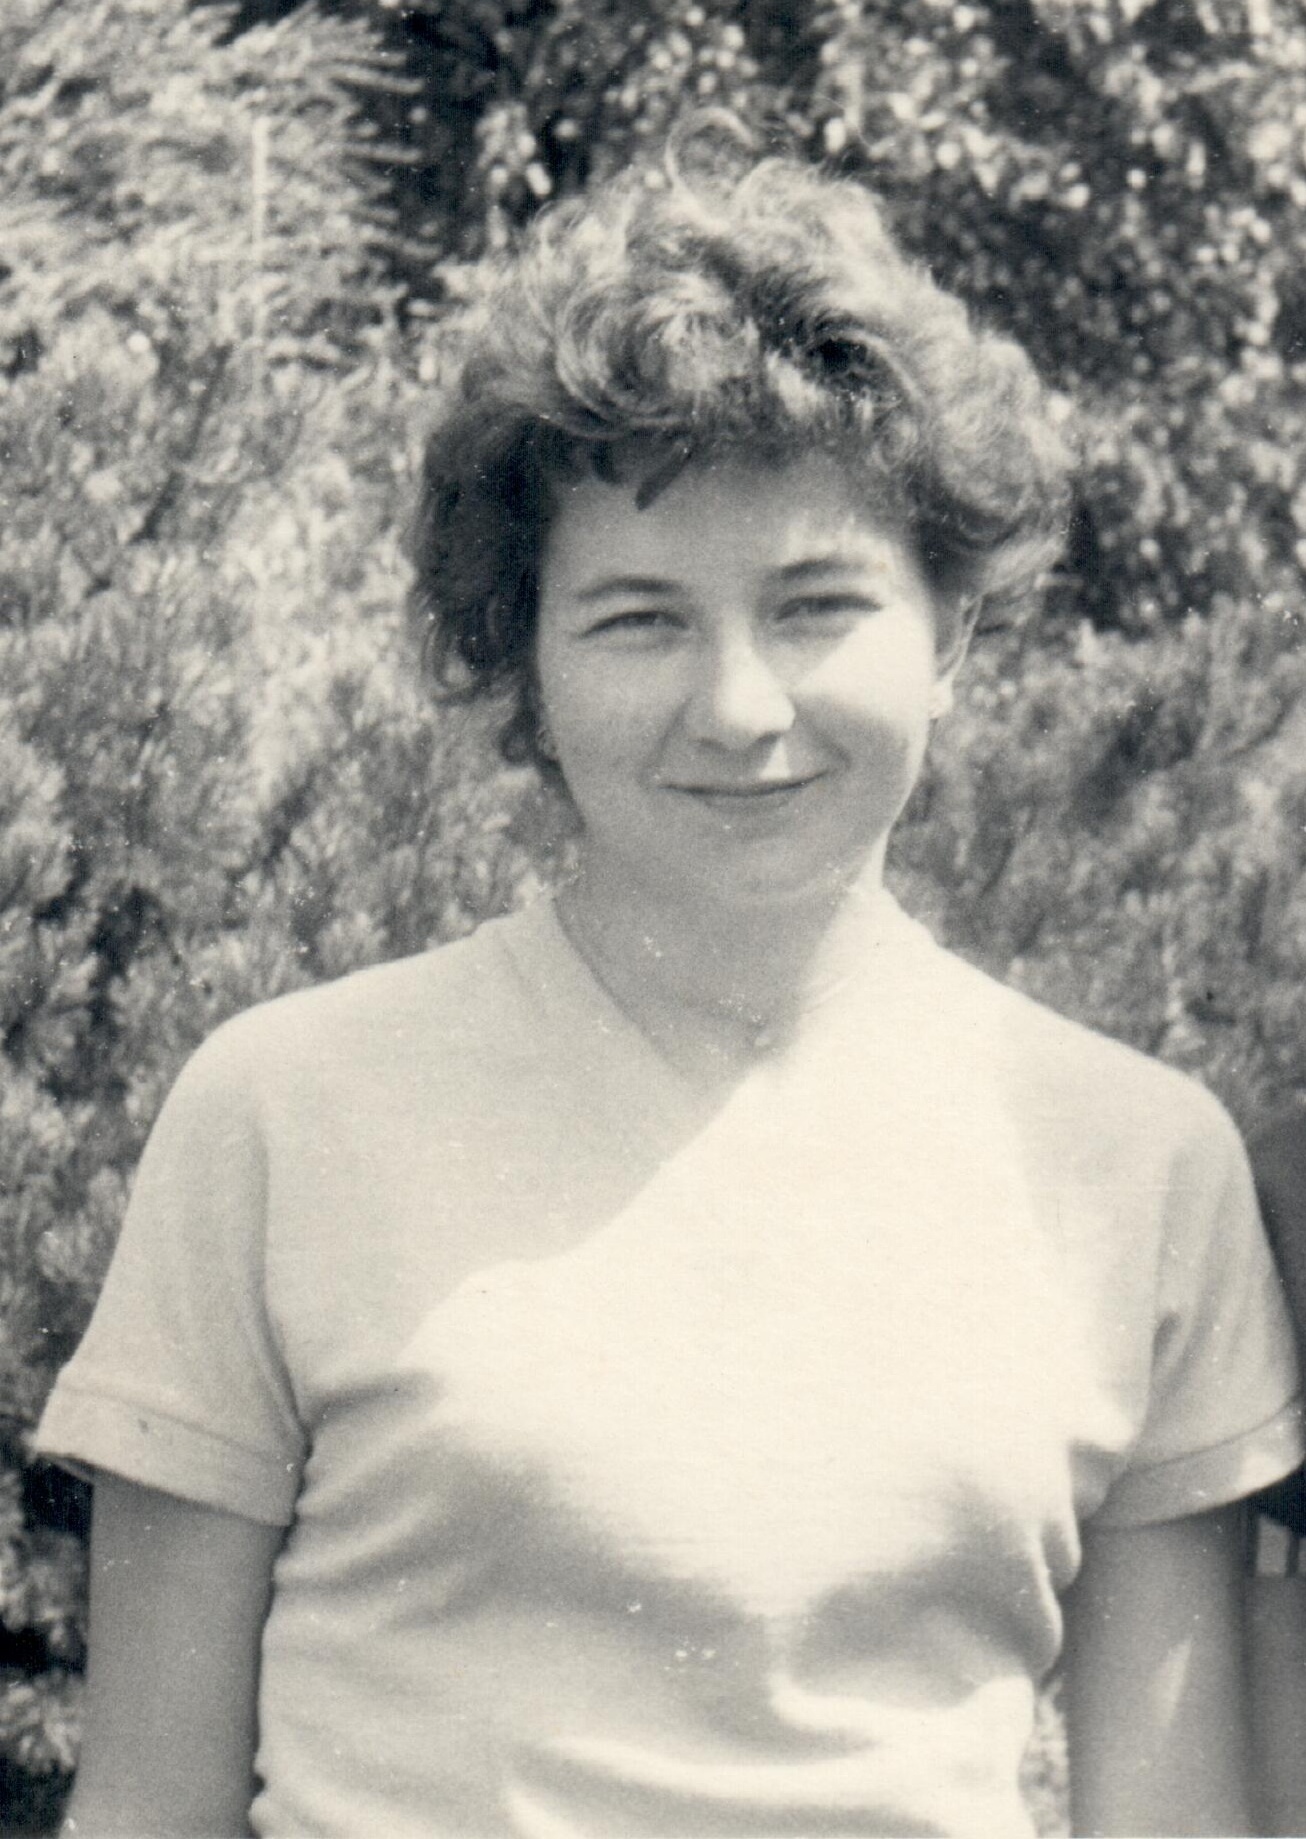 Věra Burešová, second half of the 1950s